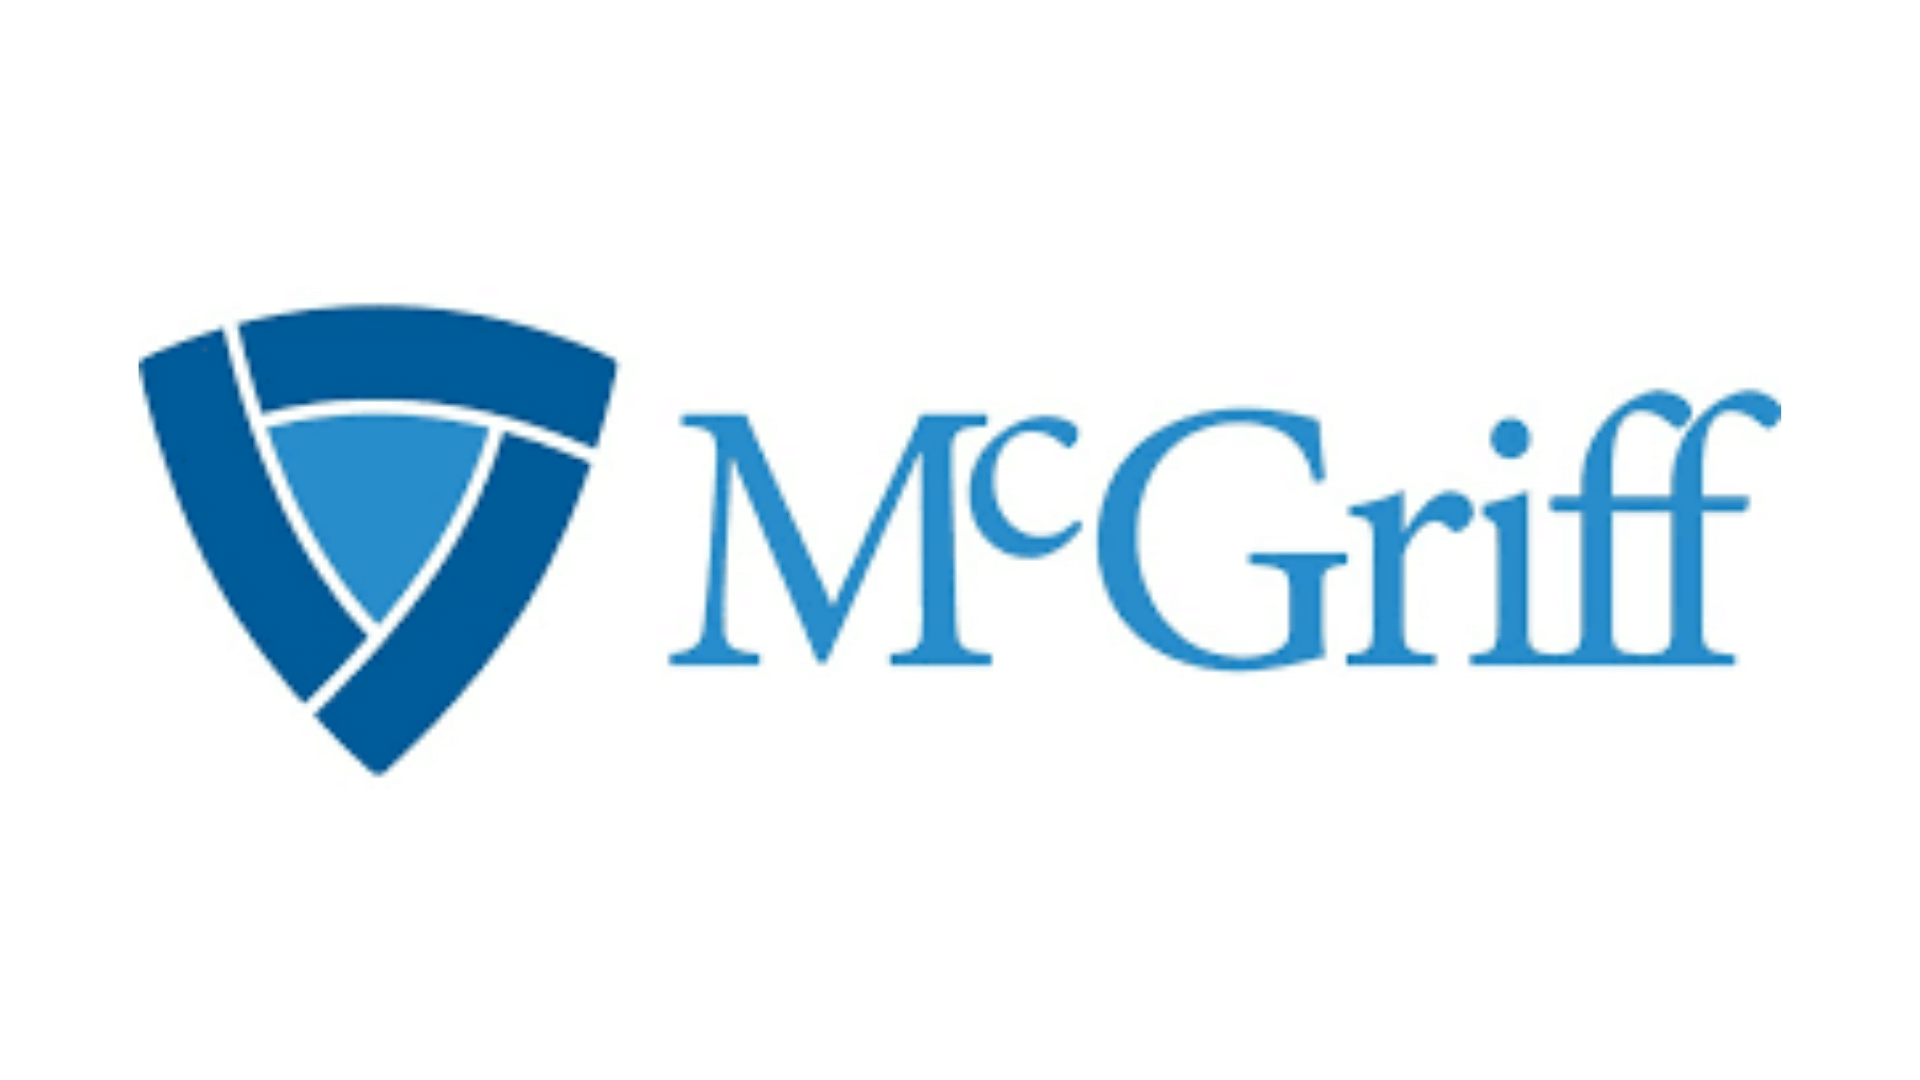 McGriff Insurance Services